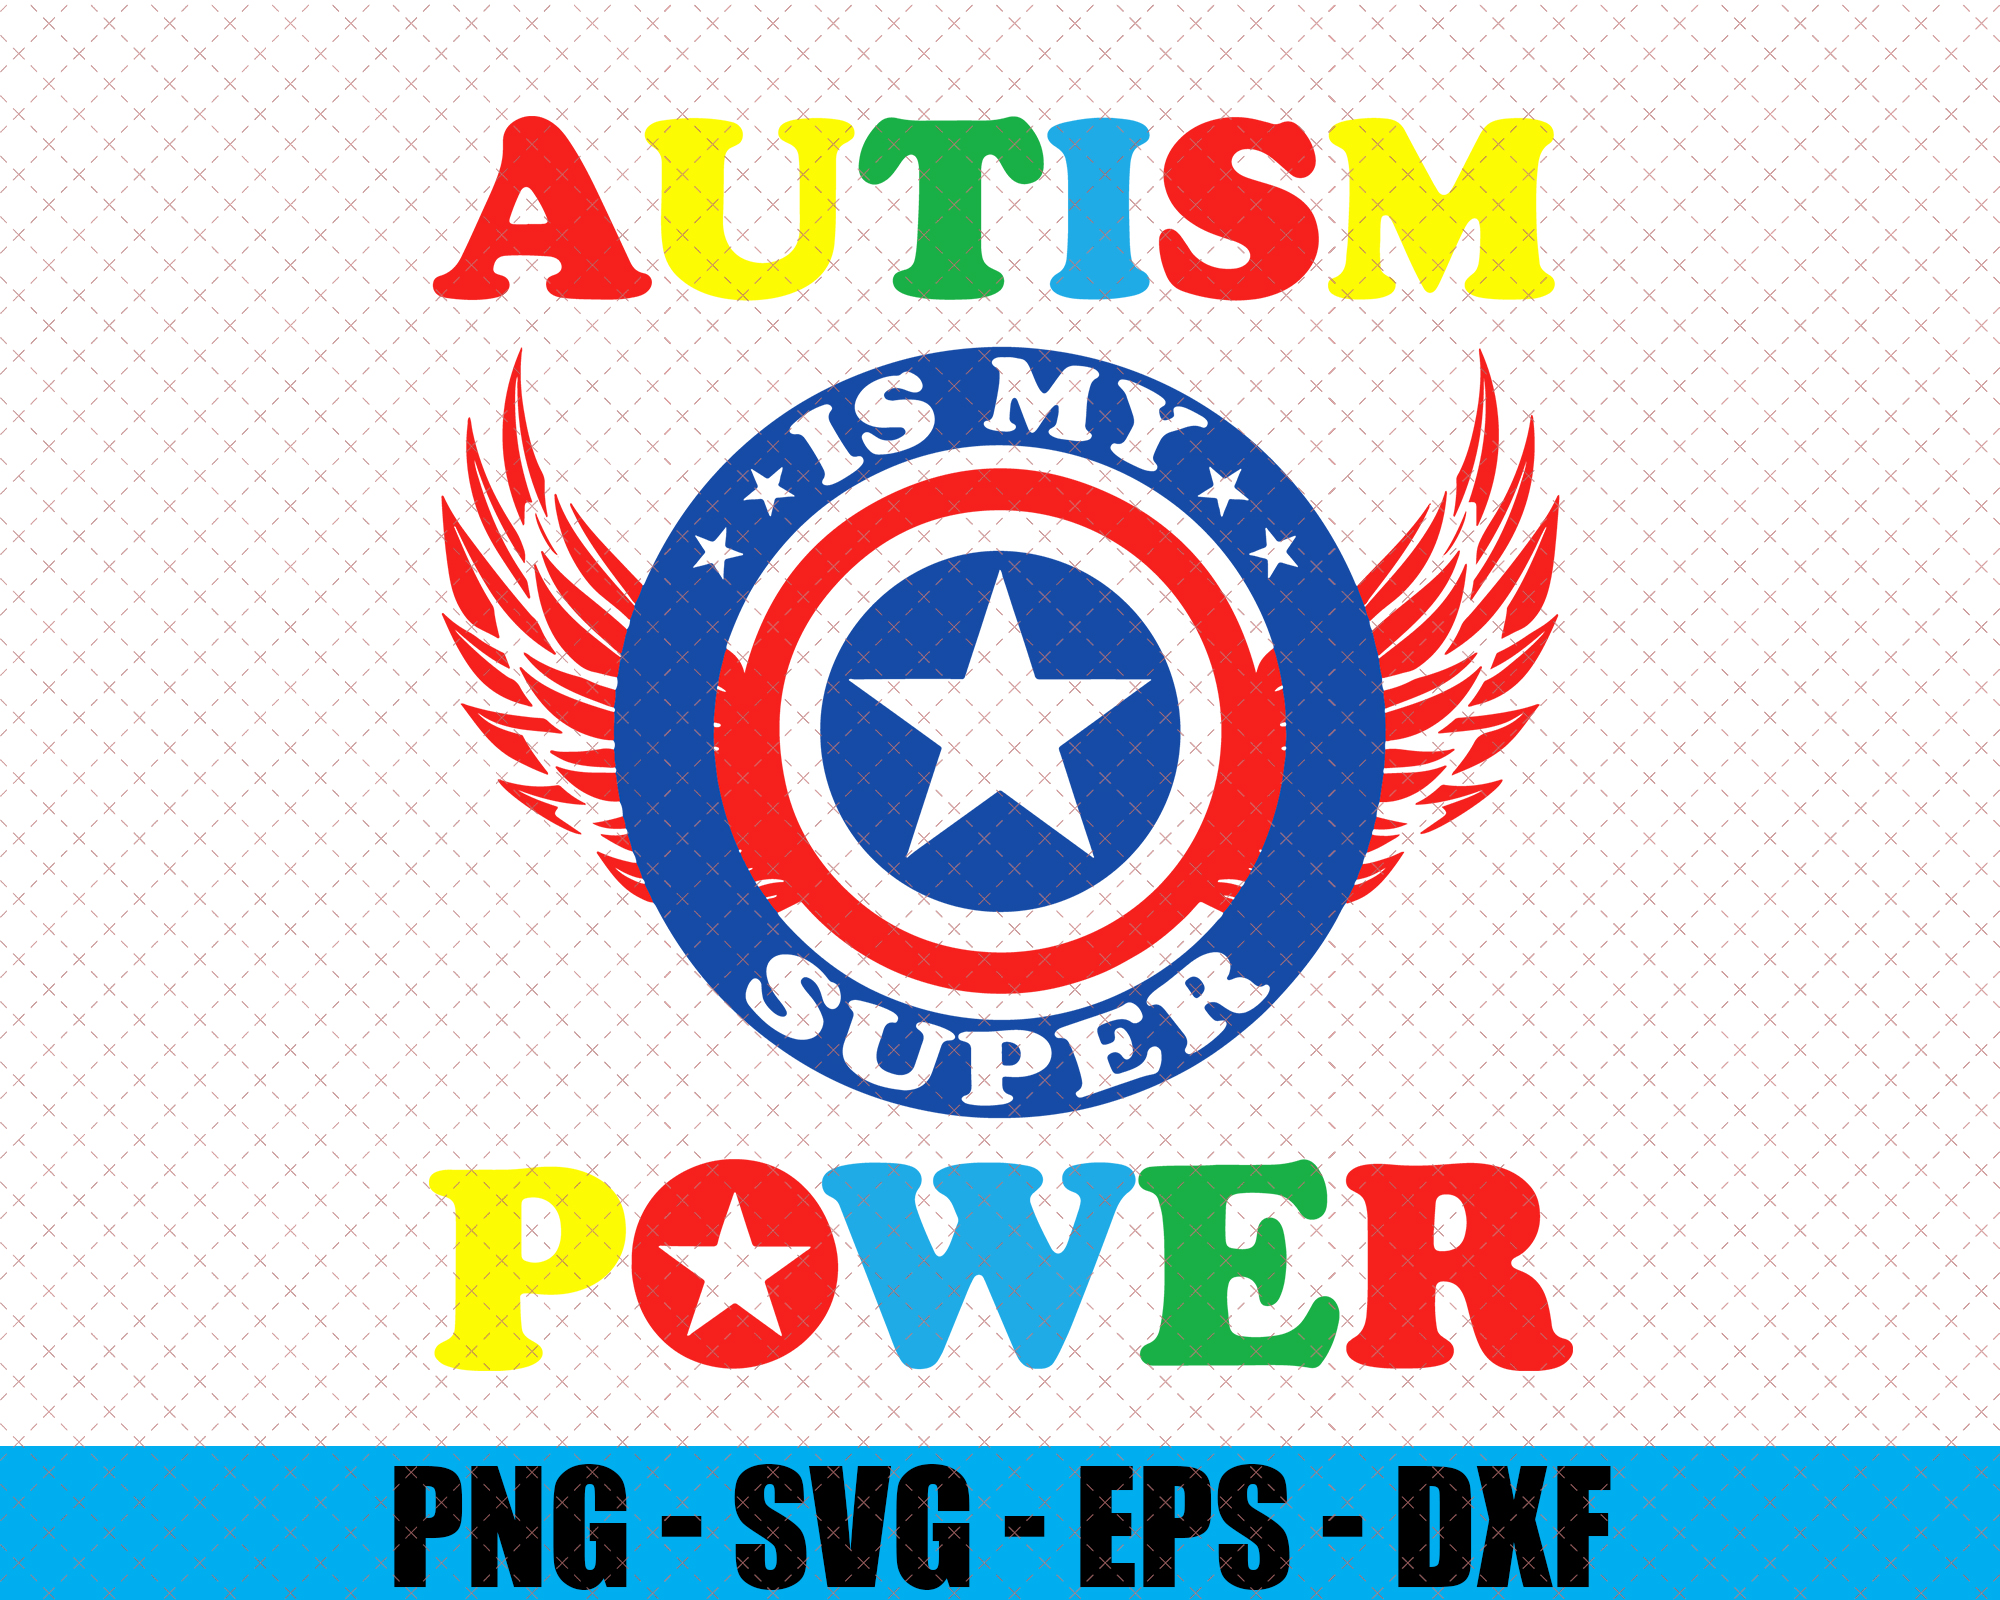 Autism is My Super Power Superhero Autism Awareness